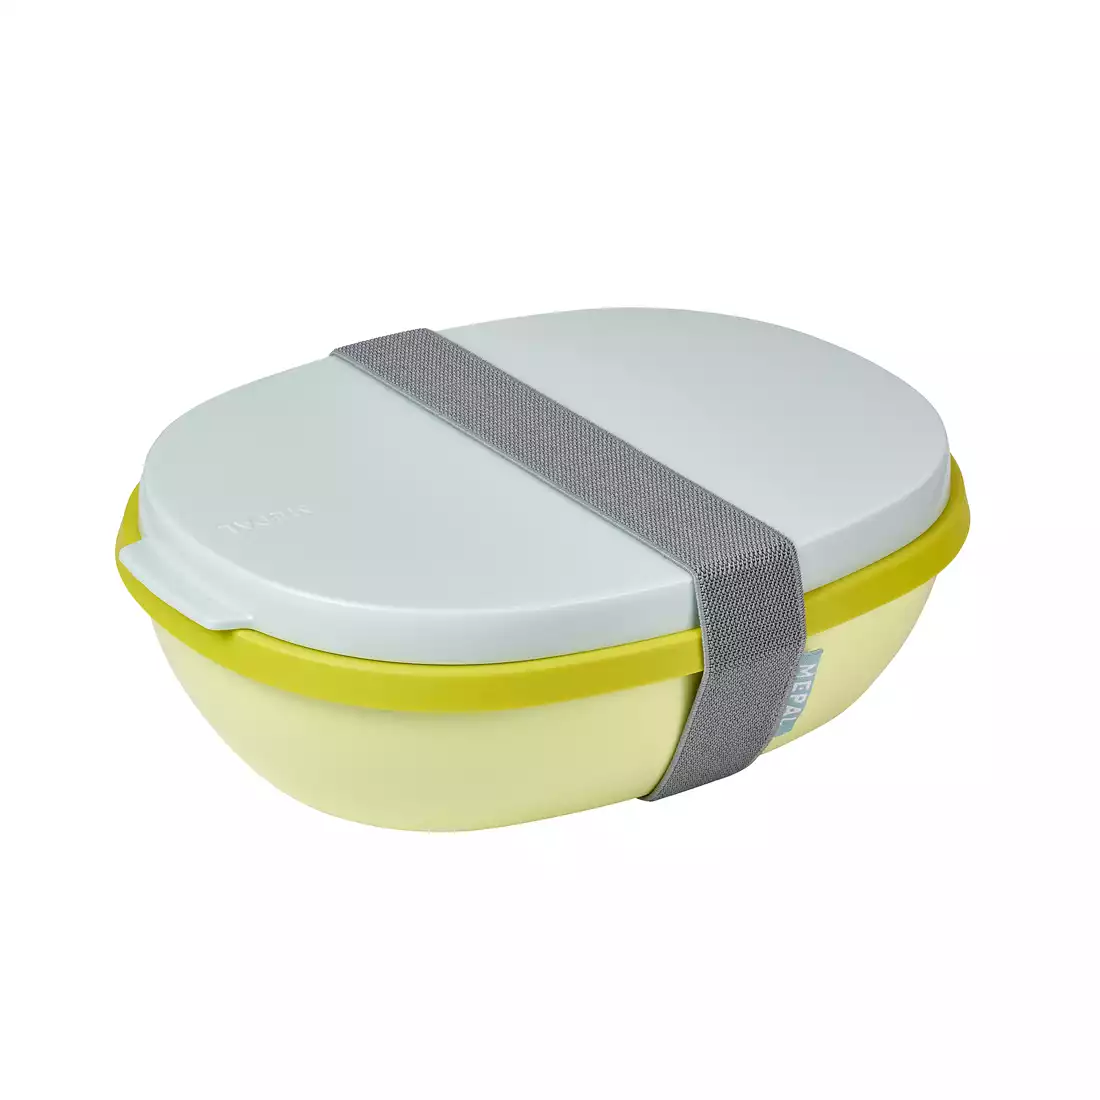 Mepal Ellipse Duo Lemon Vibe lunchbox, yellow-mint